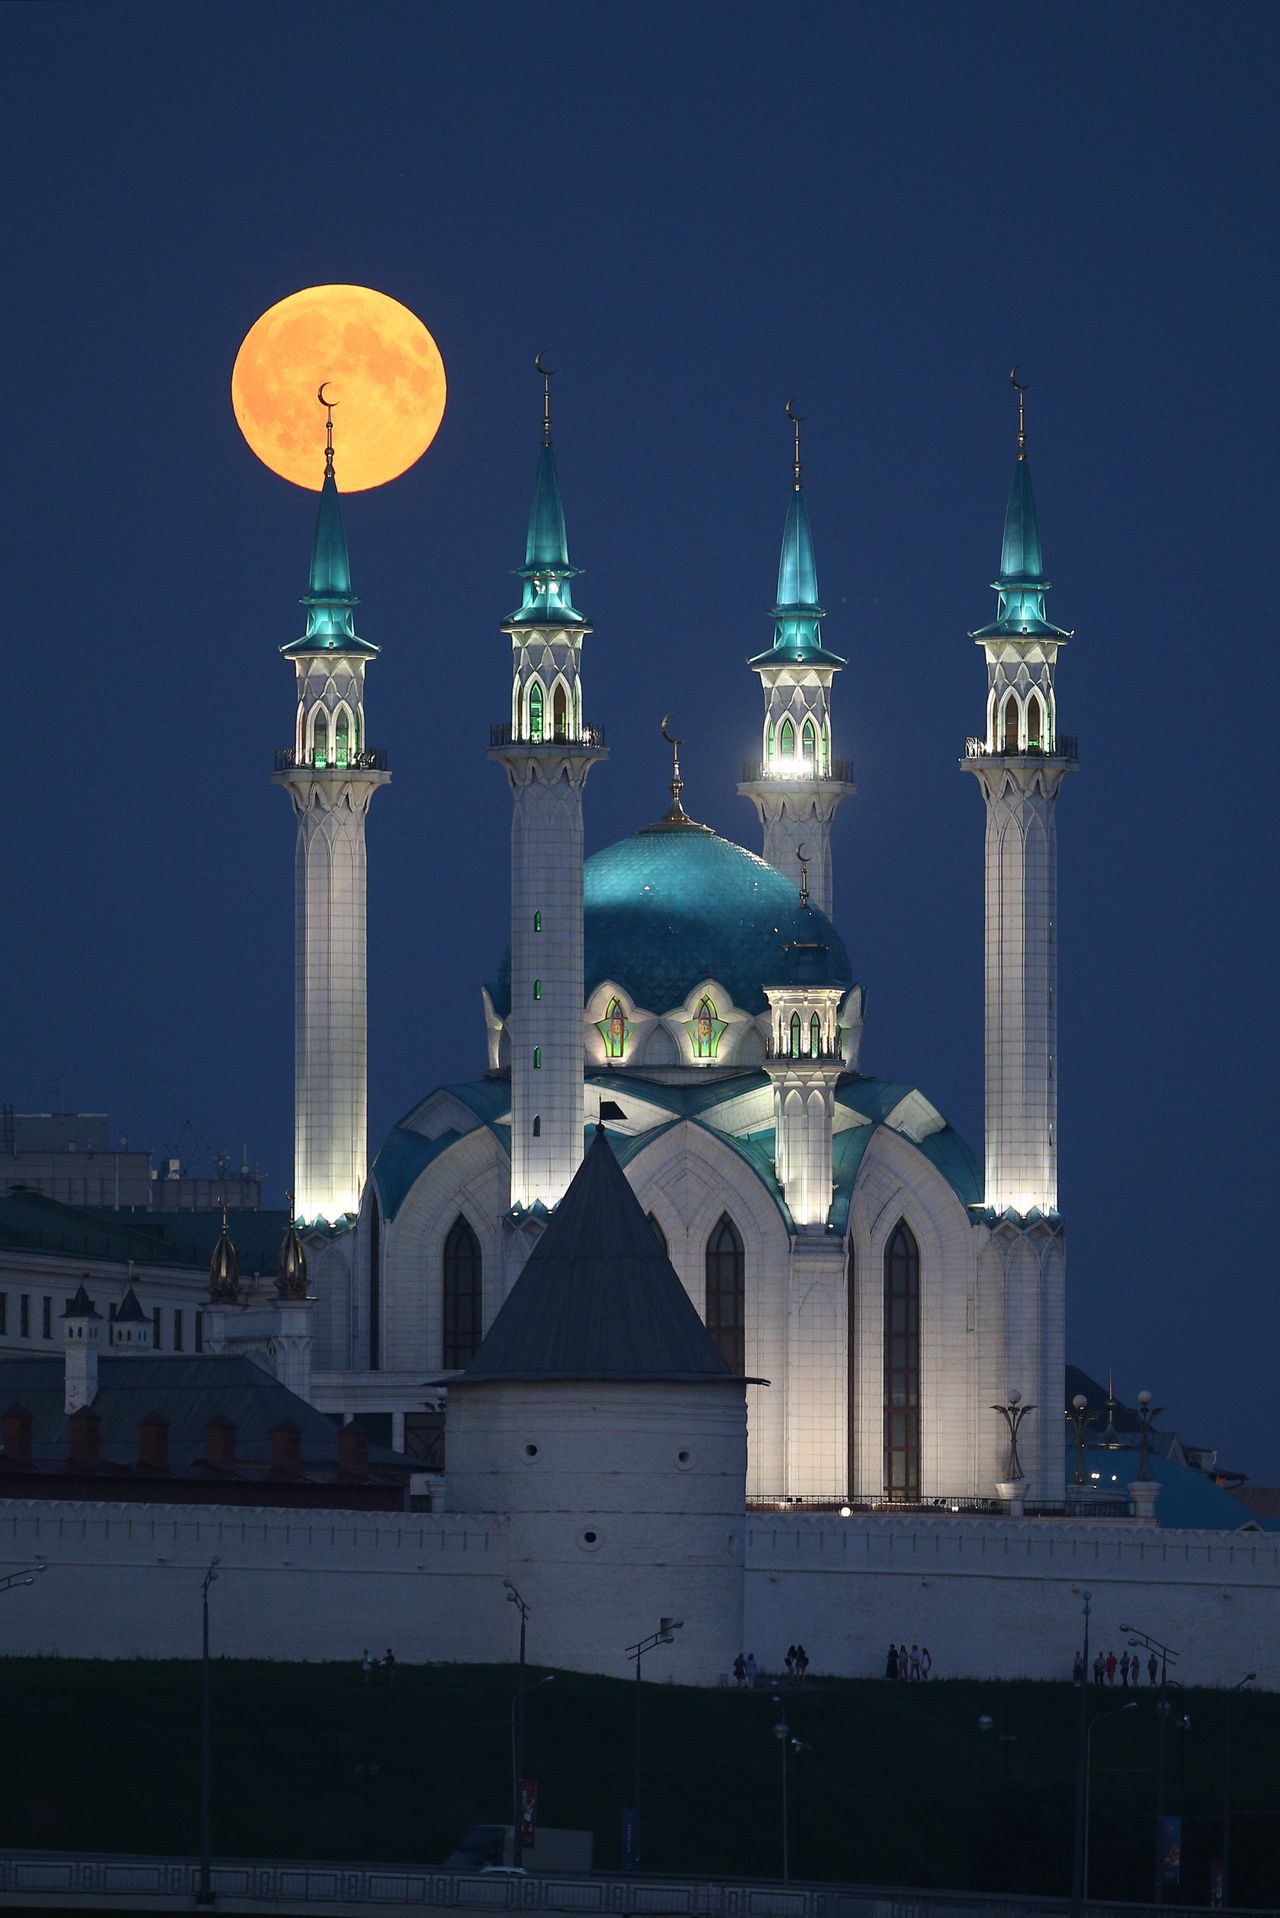 Over the Qolsharif Mosque in Kazan, Russia.